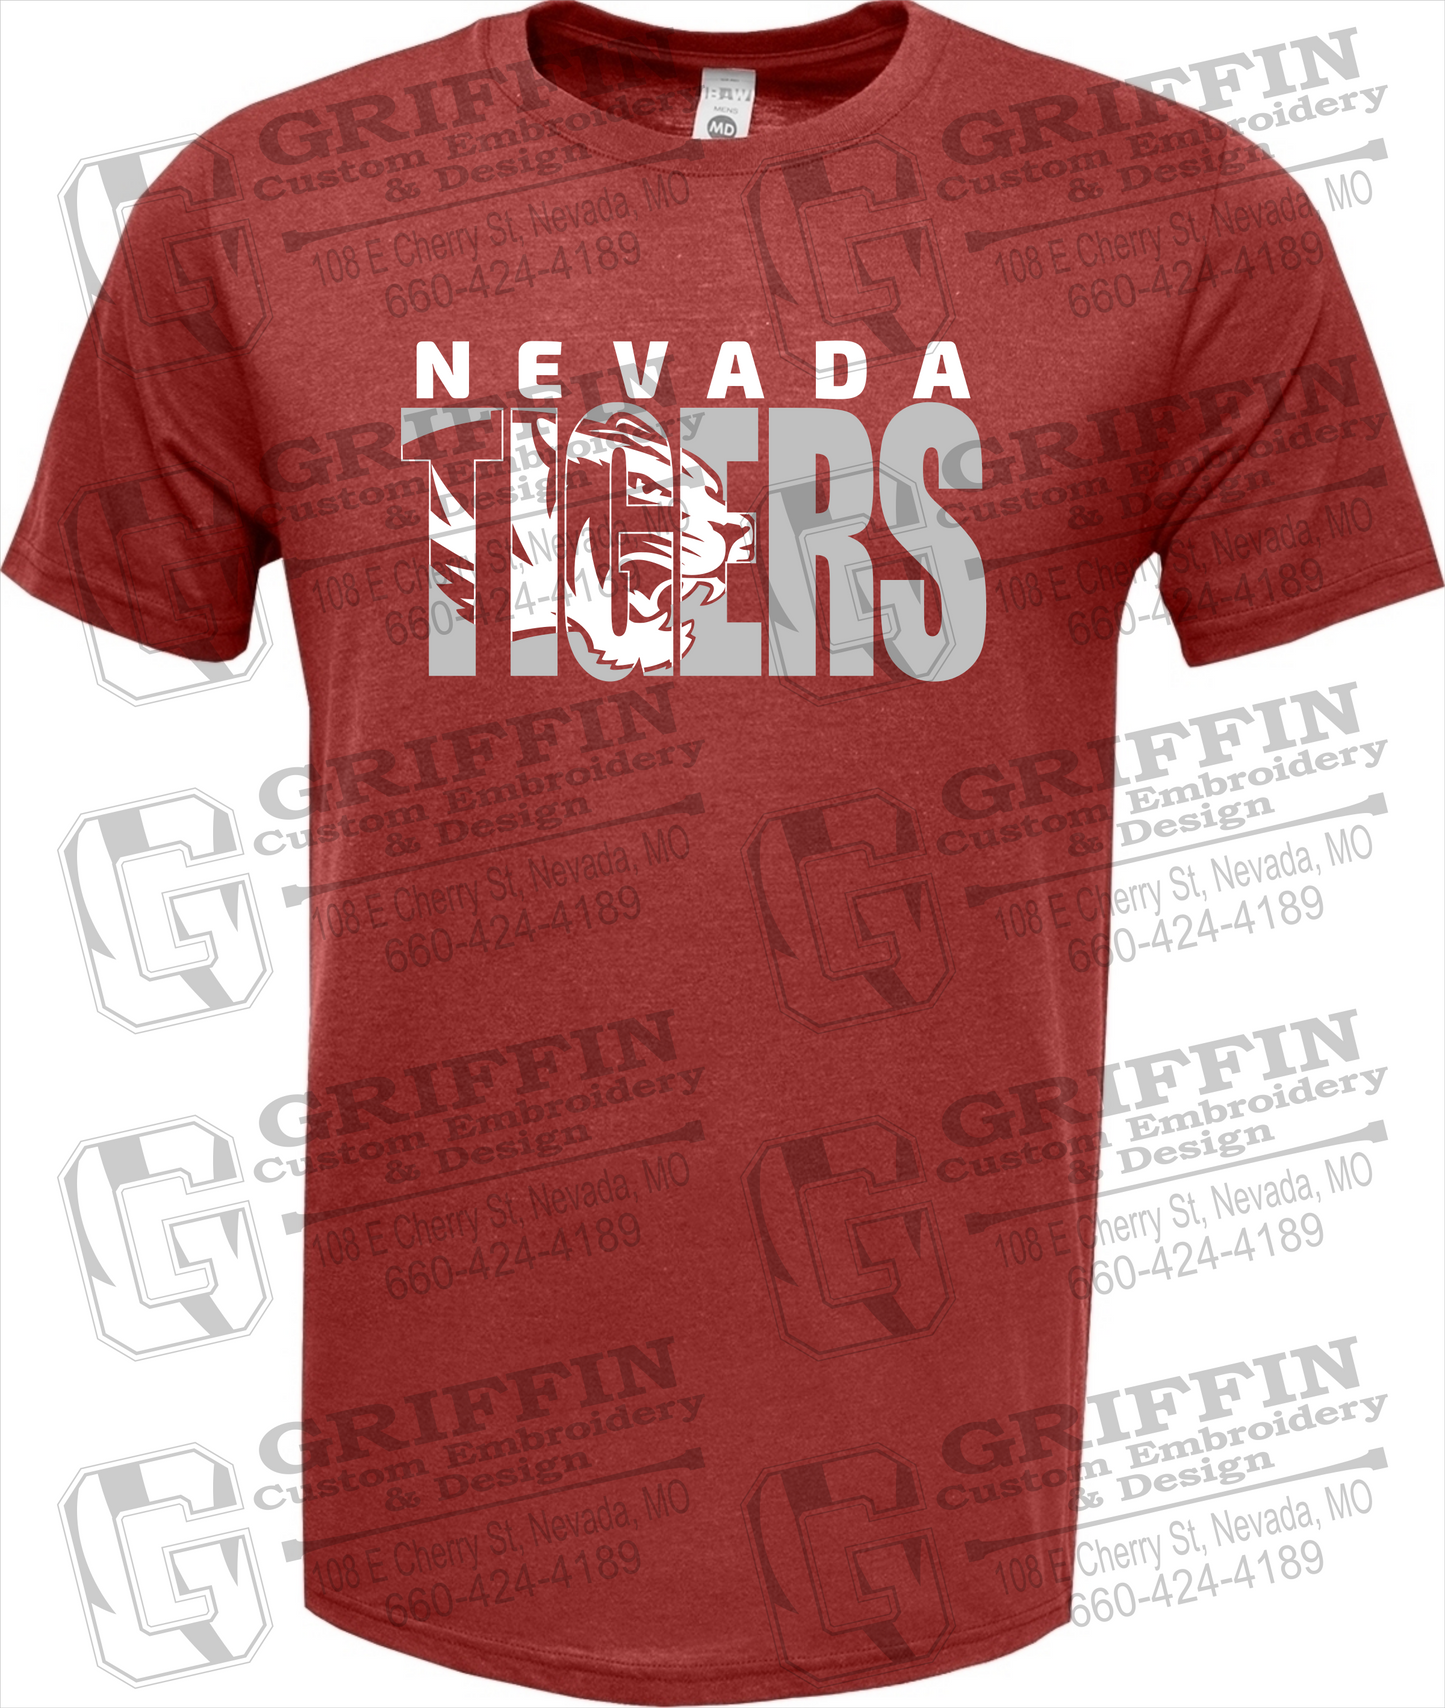 Soft-Tek Short Sleeve T-Shirt - Nevada Tigers 23-F